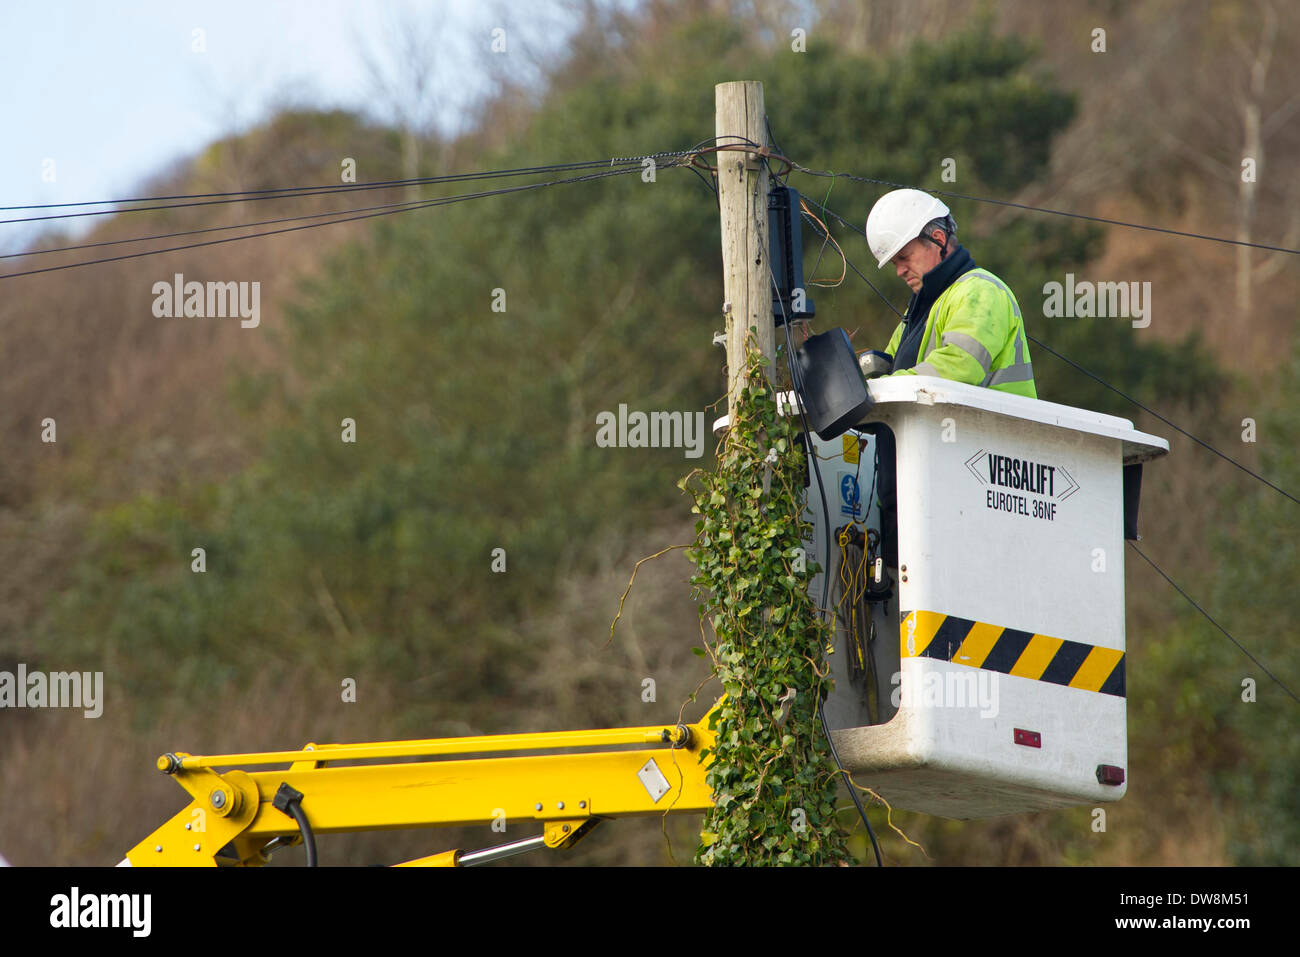 A BT telephone engineer works on a telephone pole. Stock Photo